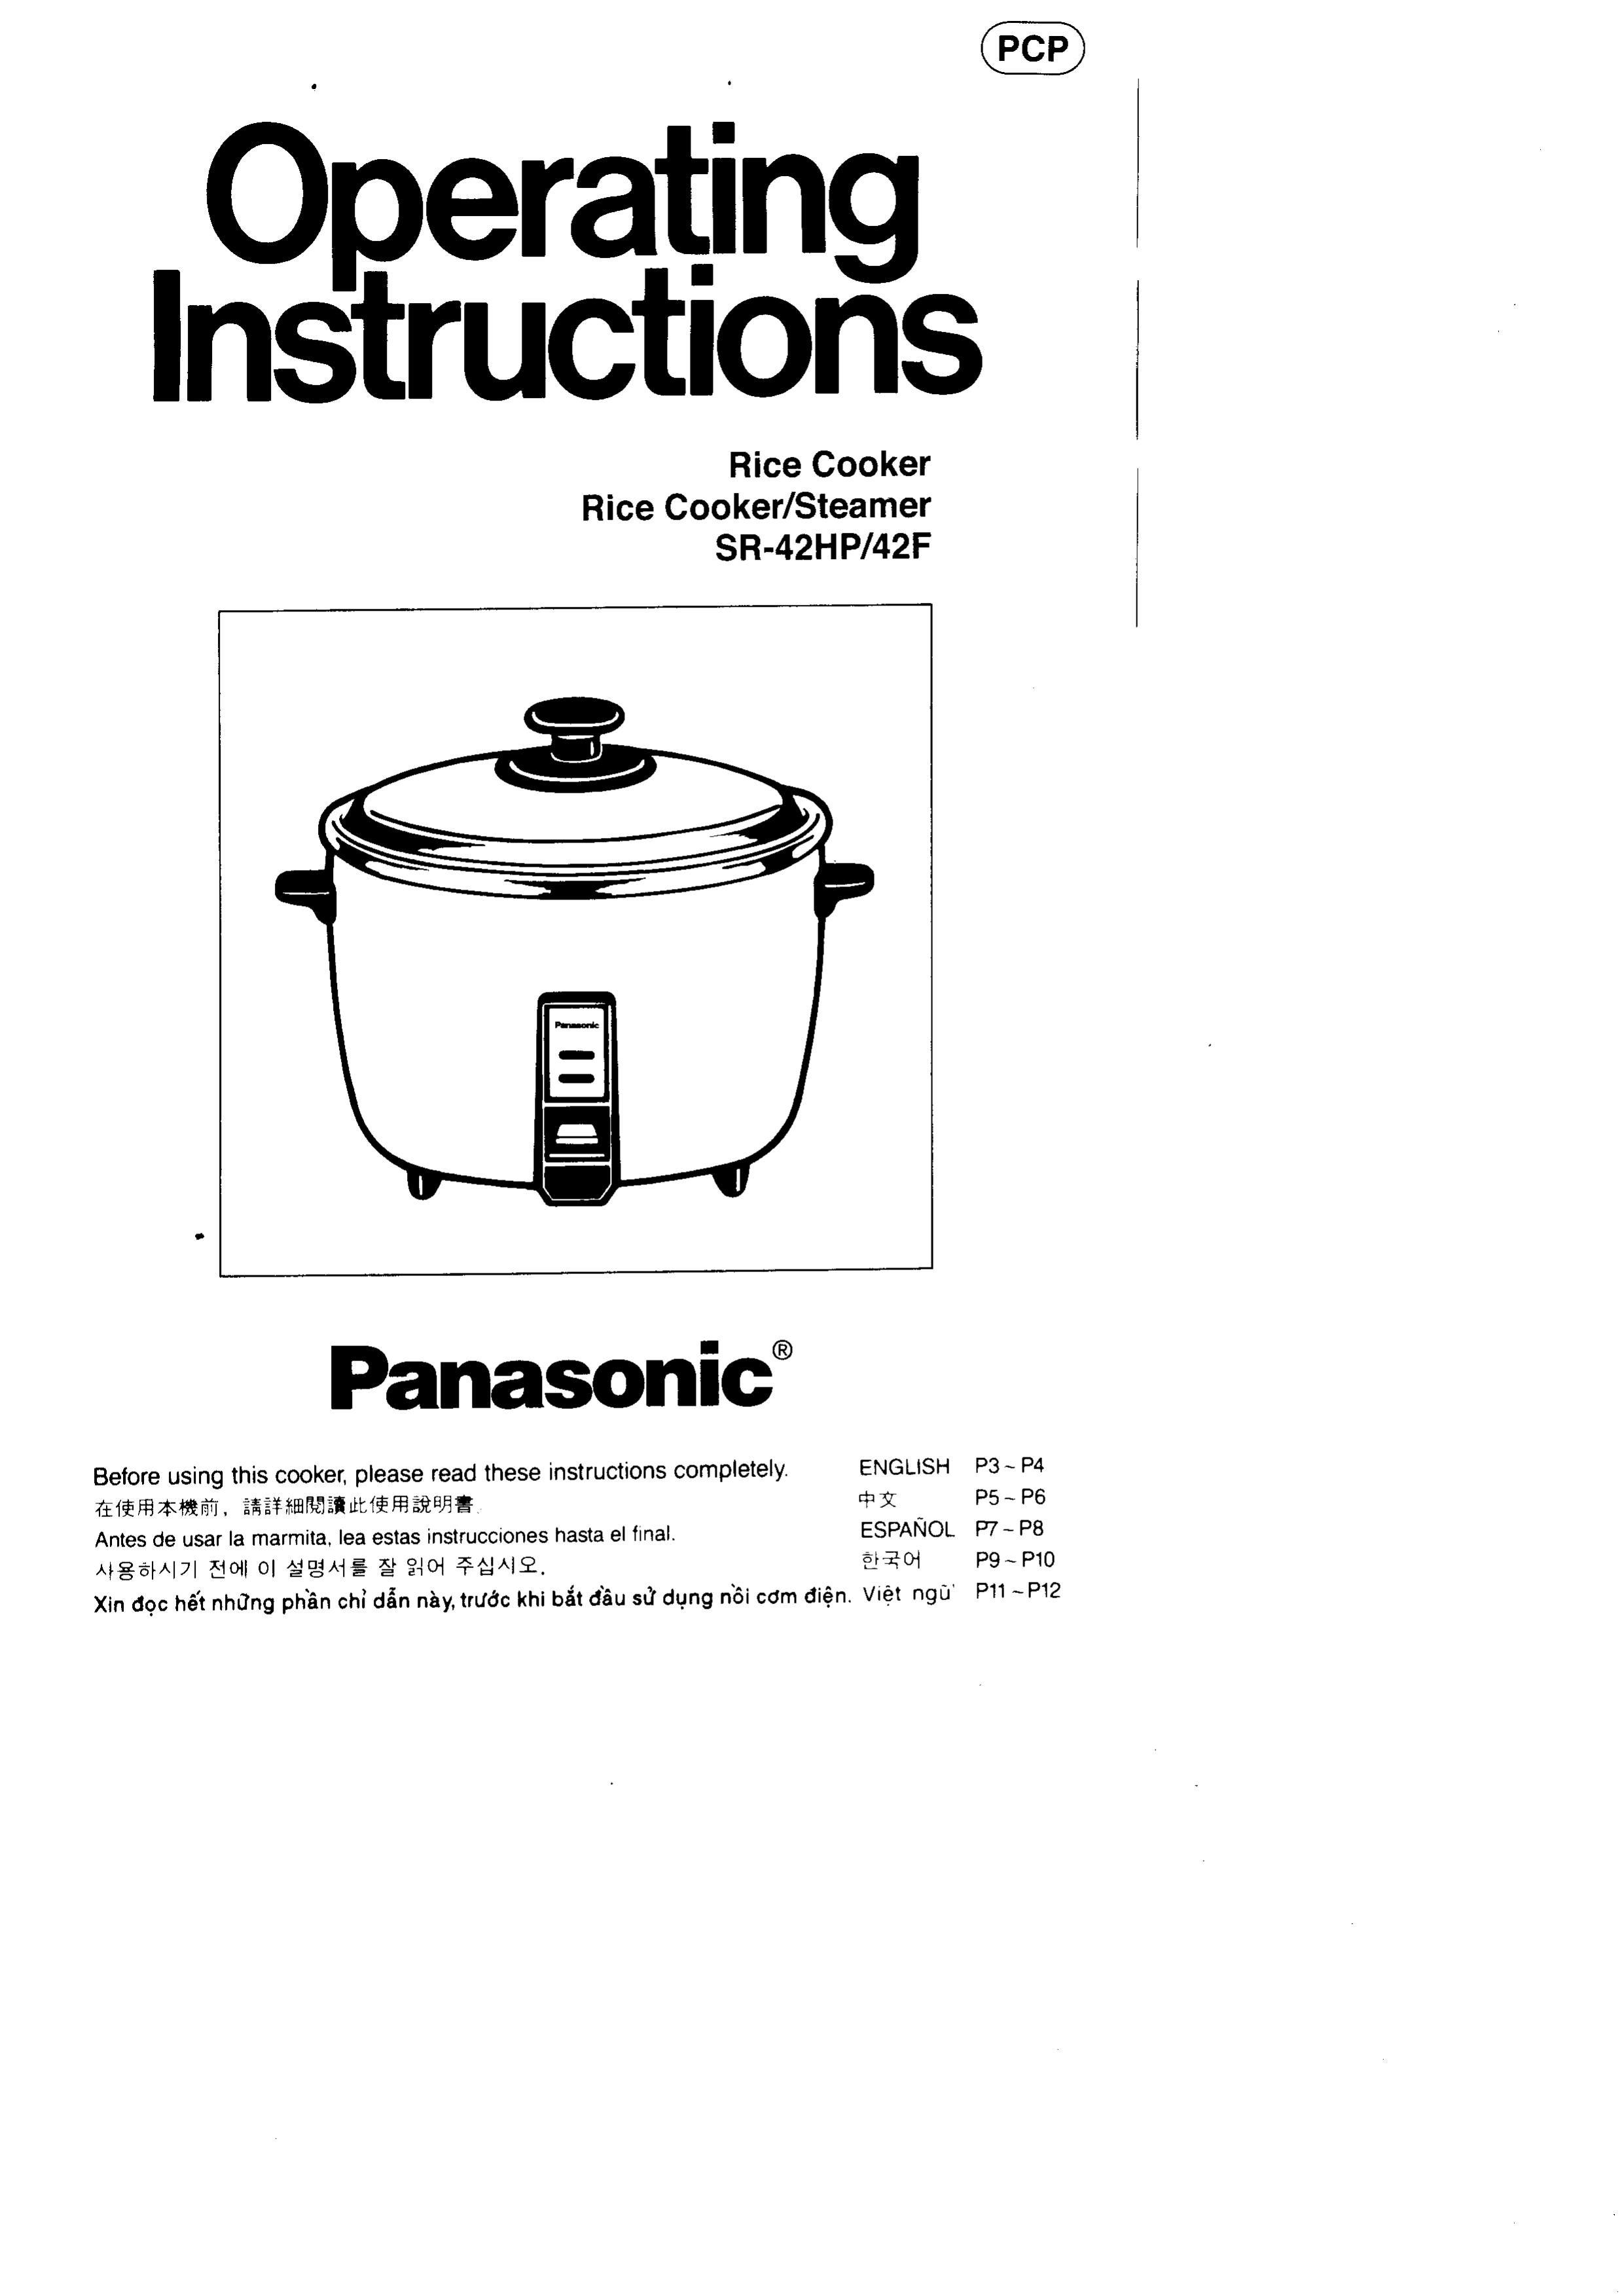 Panasonic SR-42HP/42F Rice Cooker User Manual